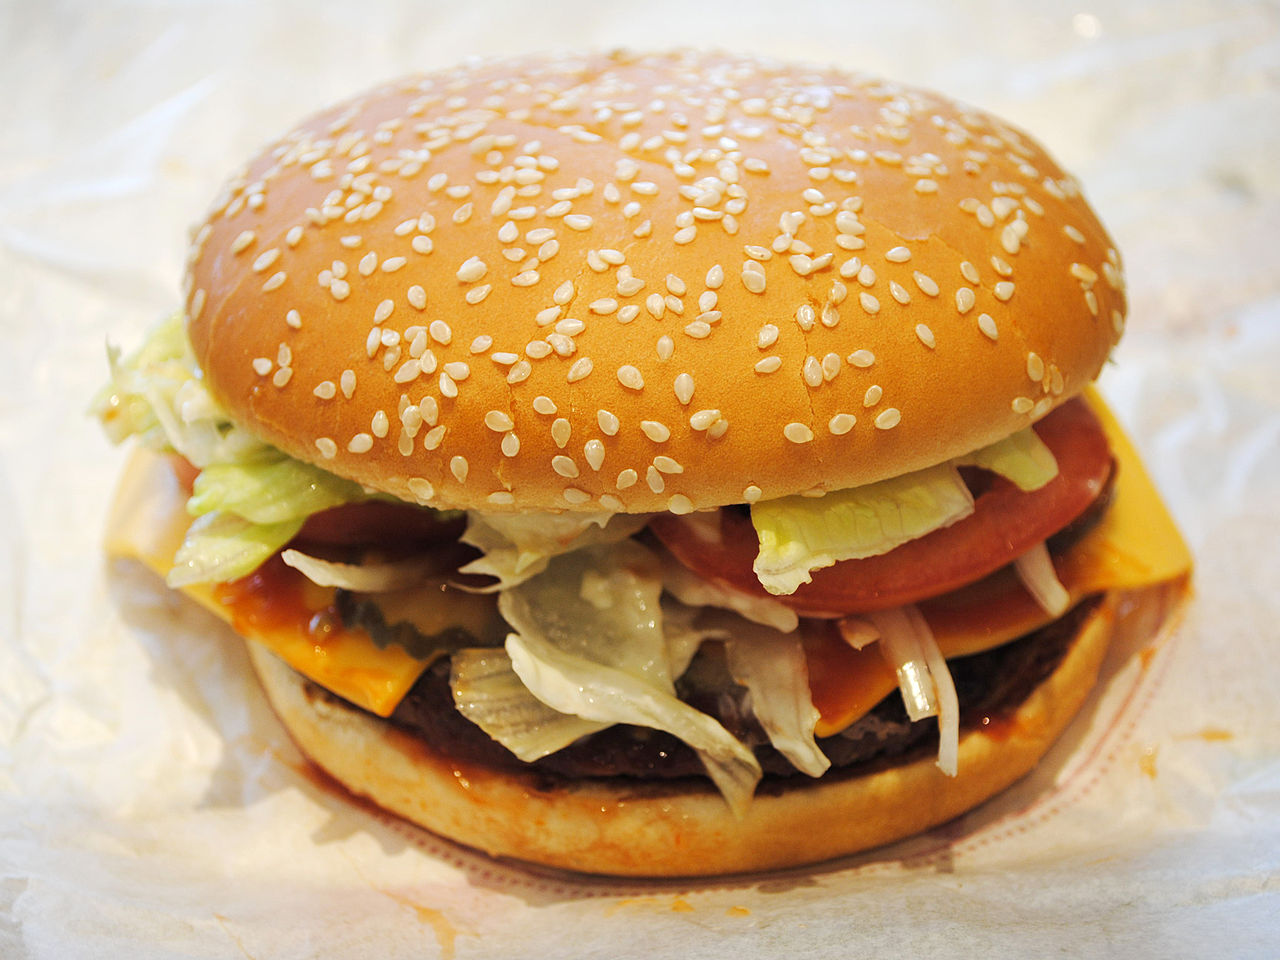 A Burger King Whopper sandwich